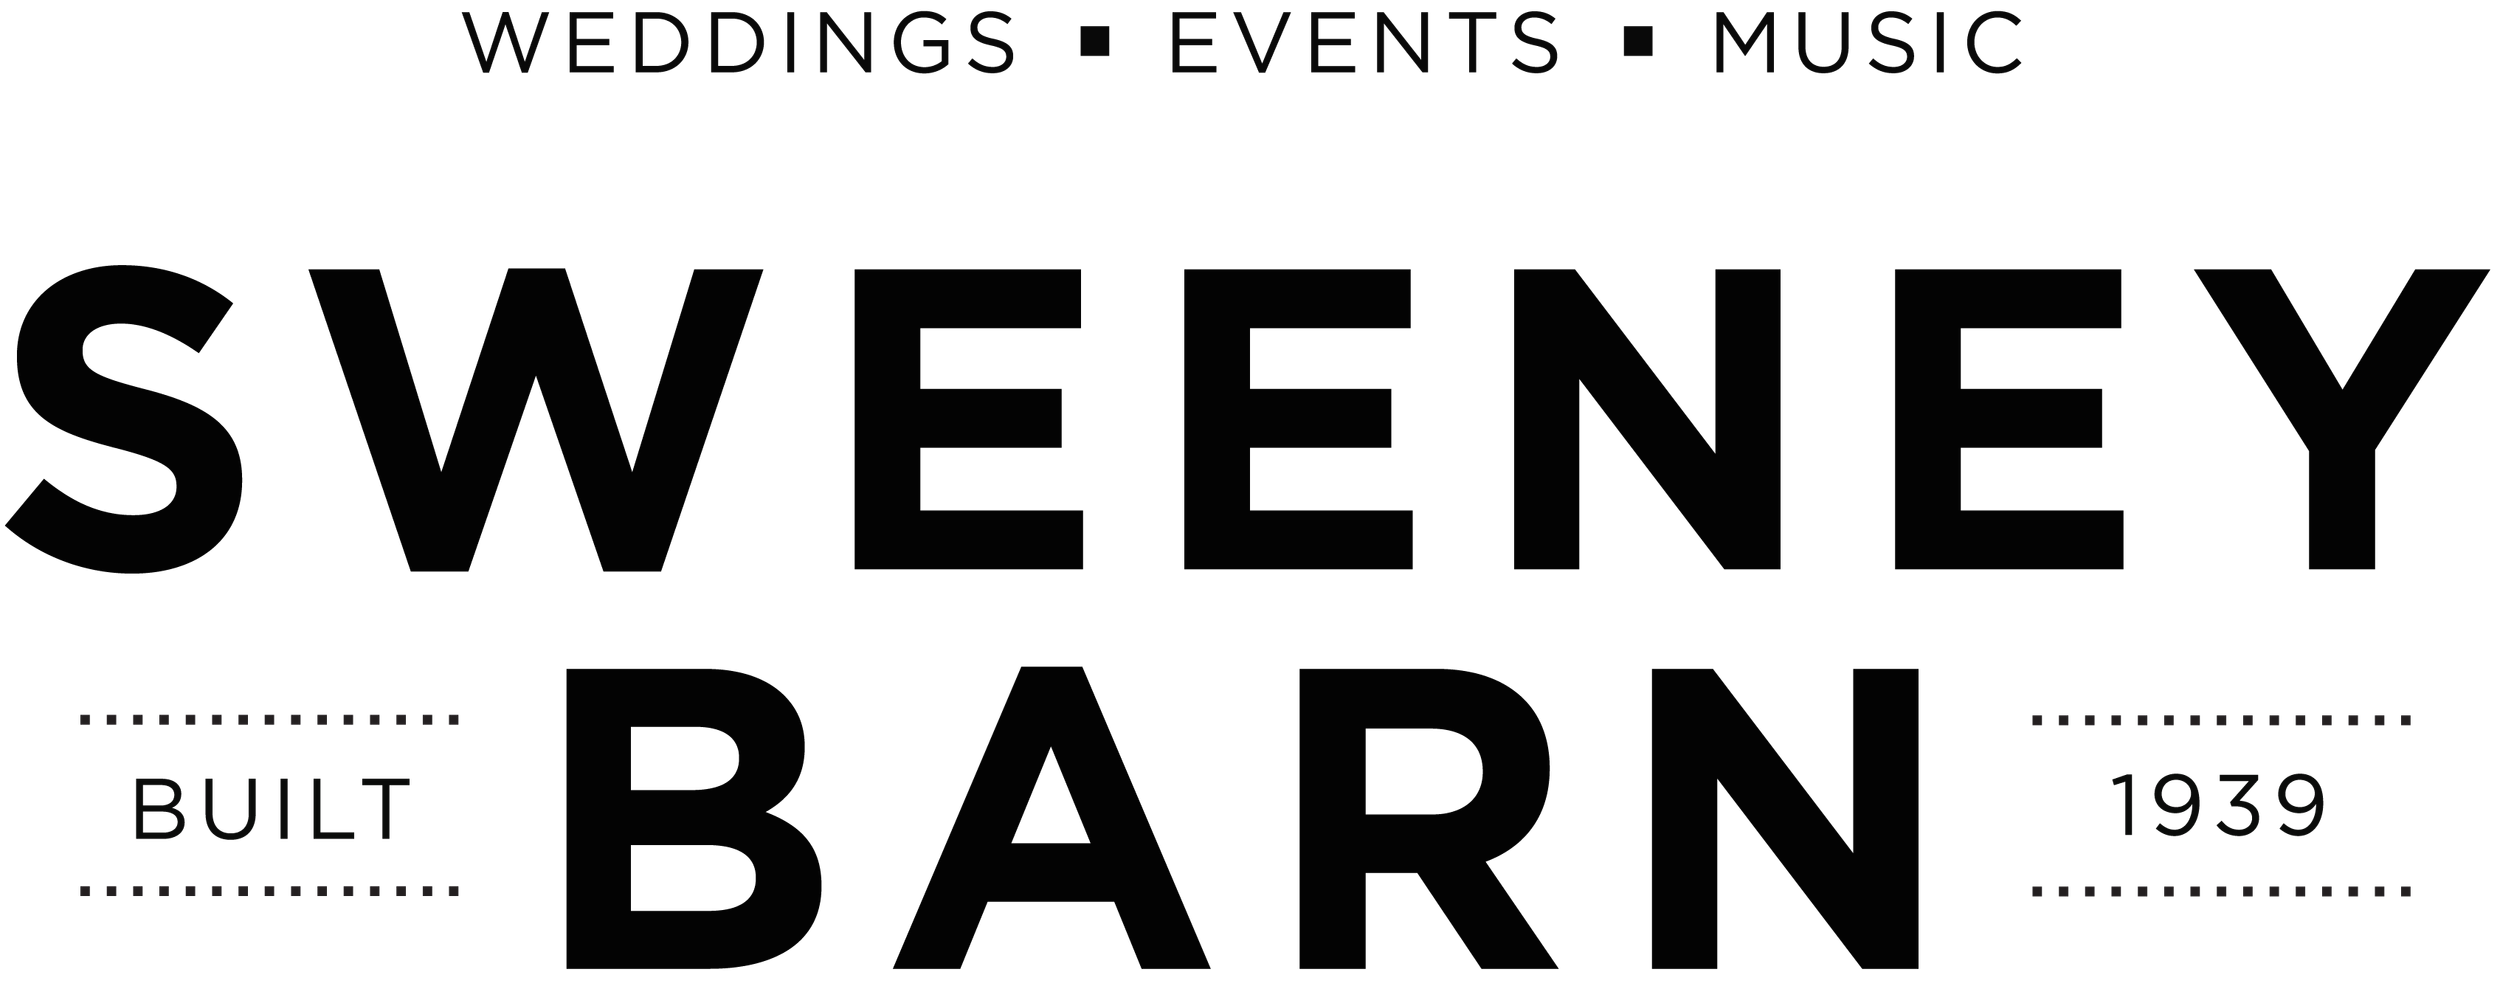 Sweeney Barn hi-res logo 11.3.18 (1).png